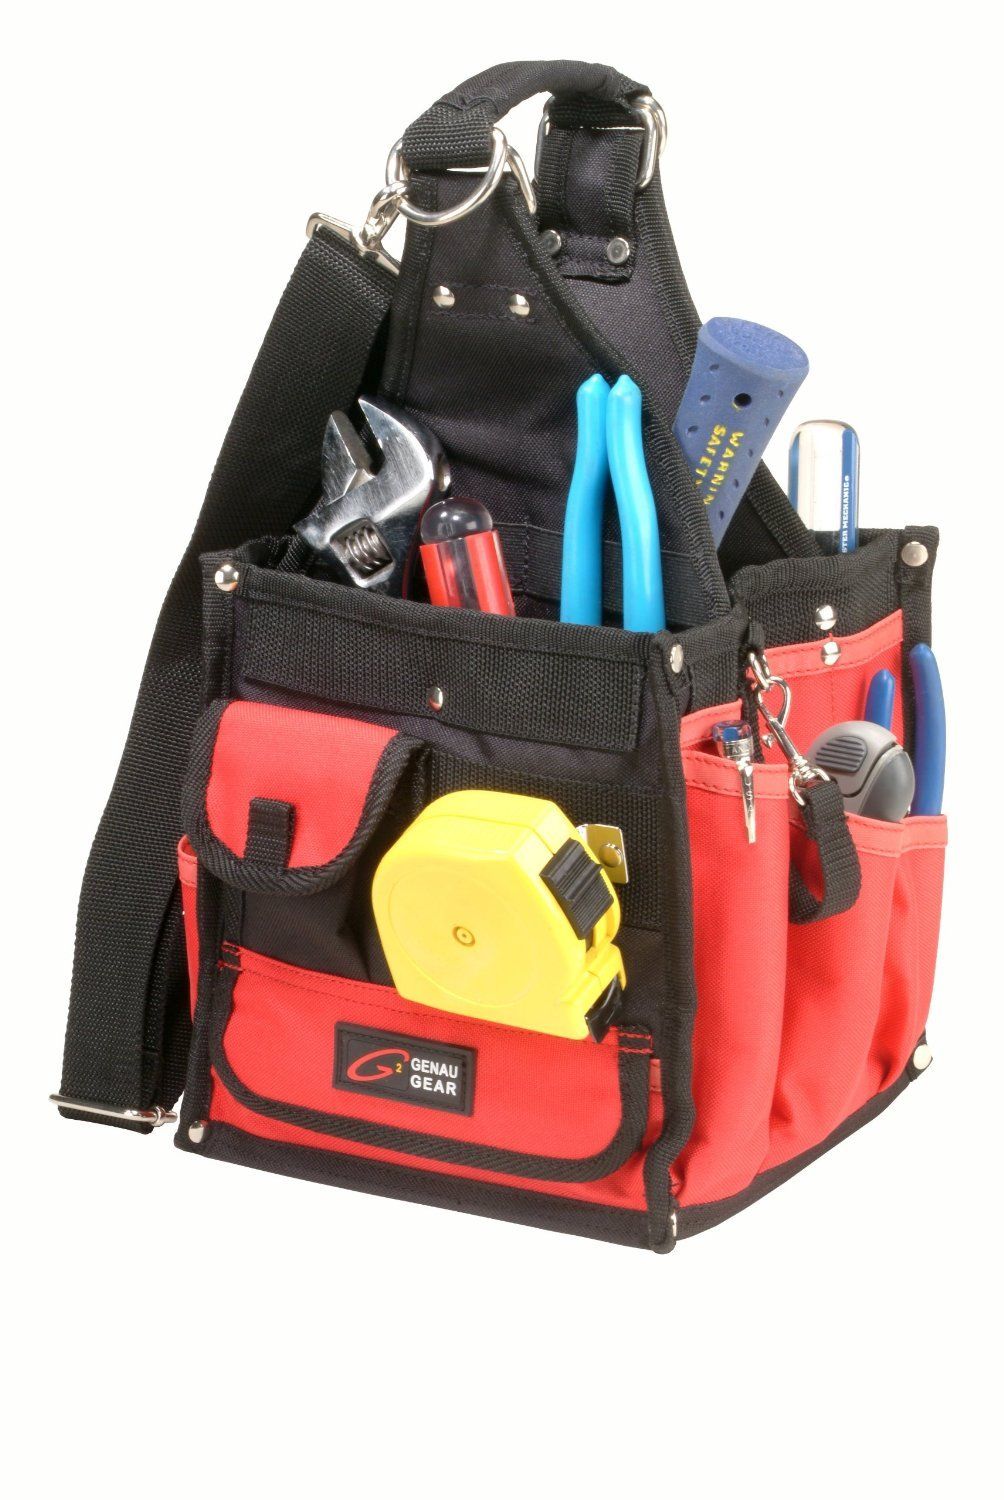 Genau Gear 9174 Square Maintenance Tool Holder Bag 17 Pockets Black / Red